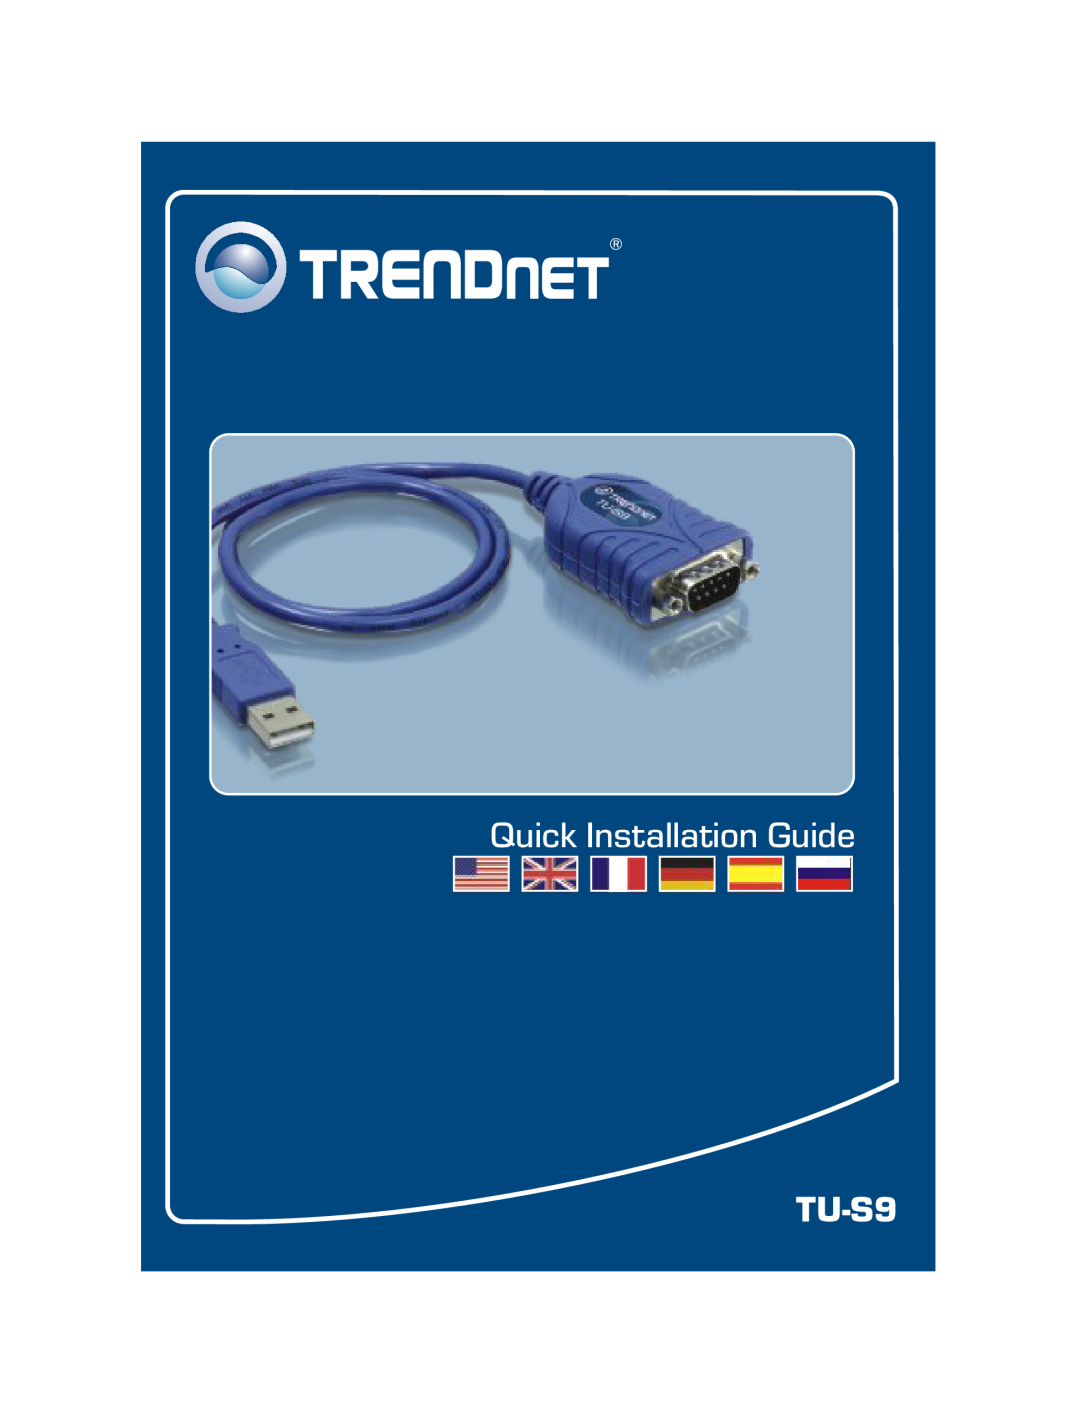 TRENDnet TU-S9 manual Quick Installation Guide 